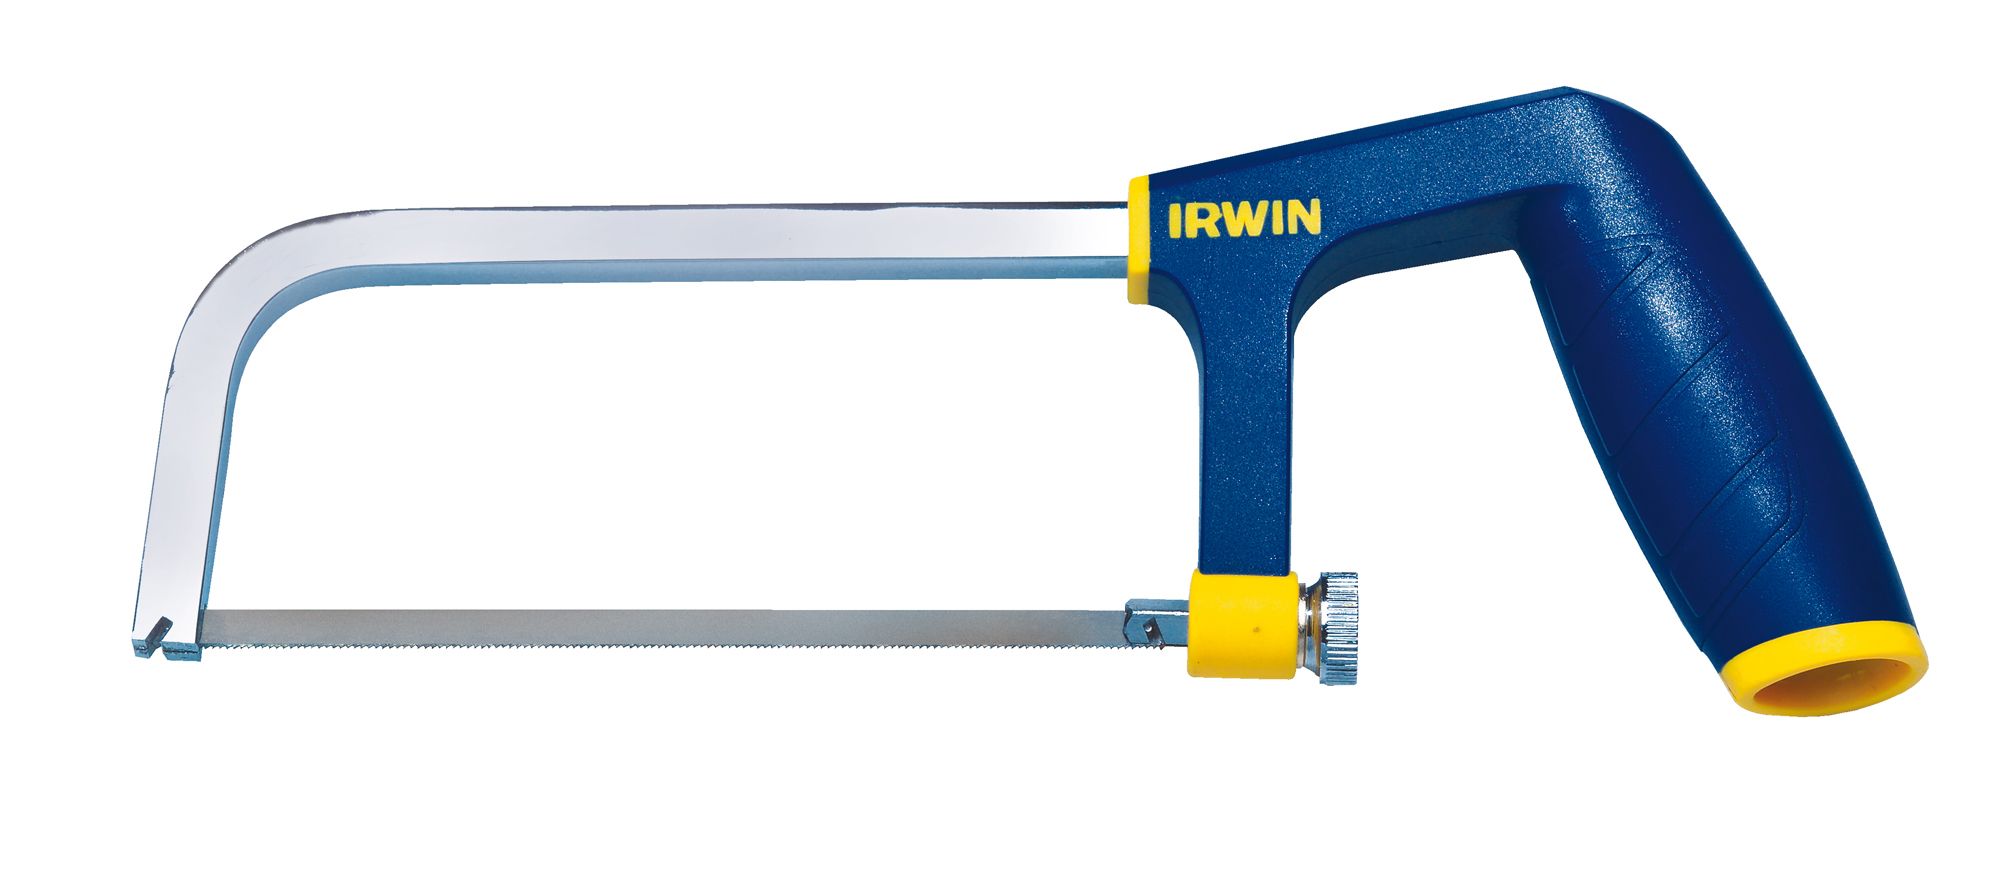 Irwin 150mm Junior hacksaw